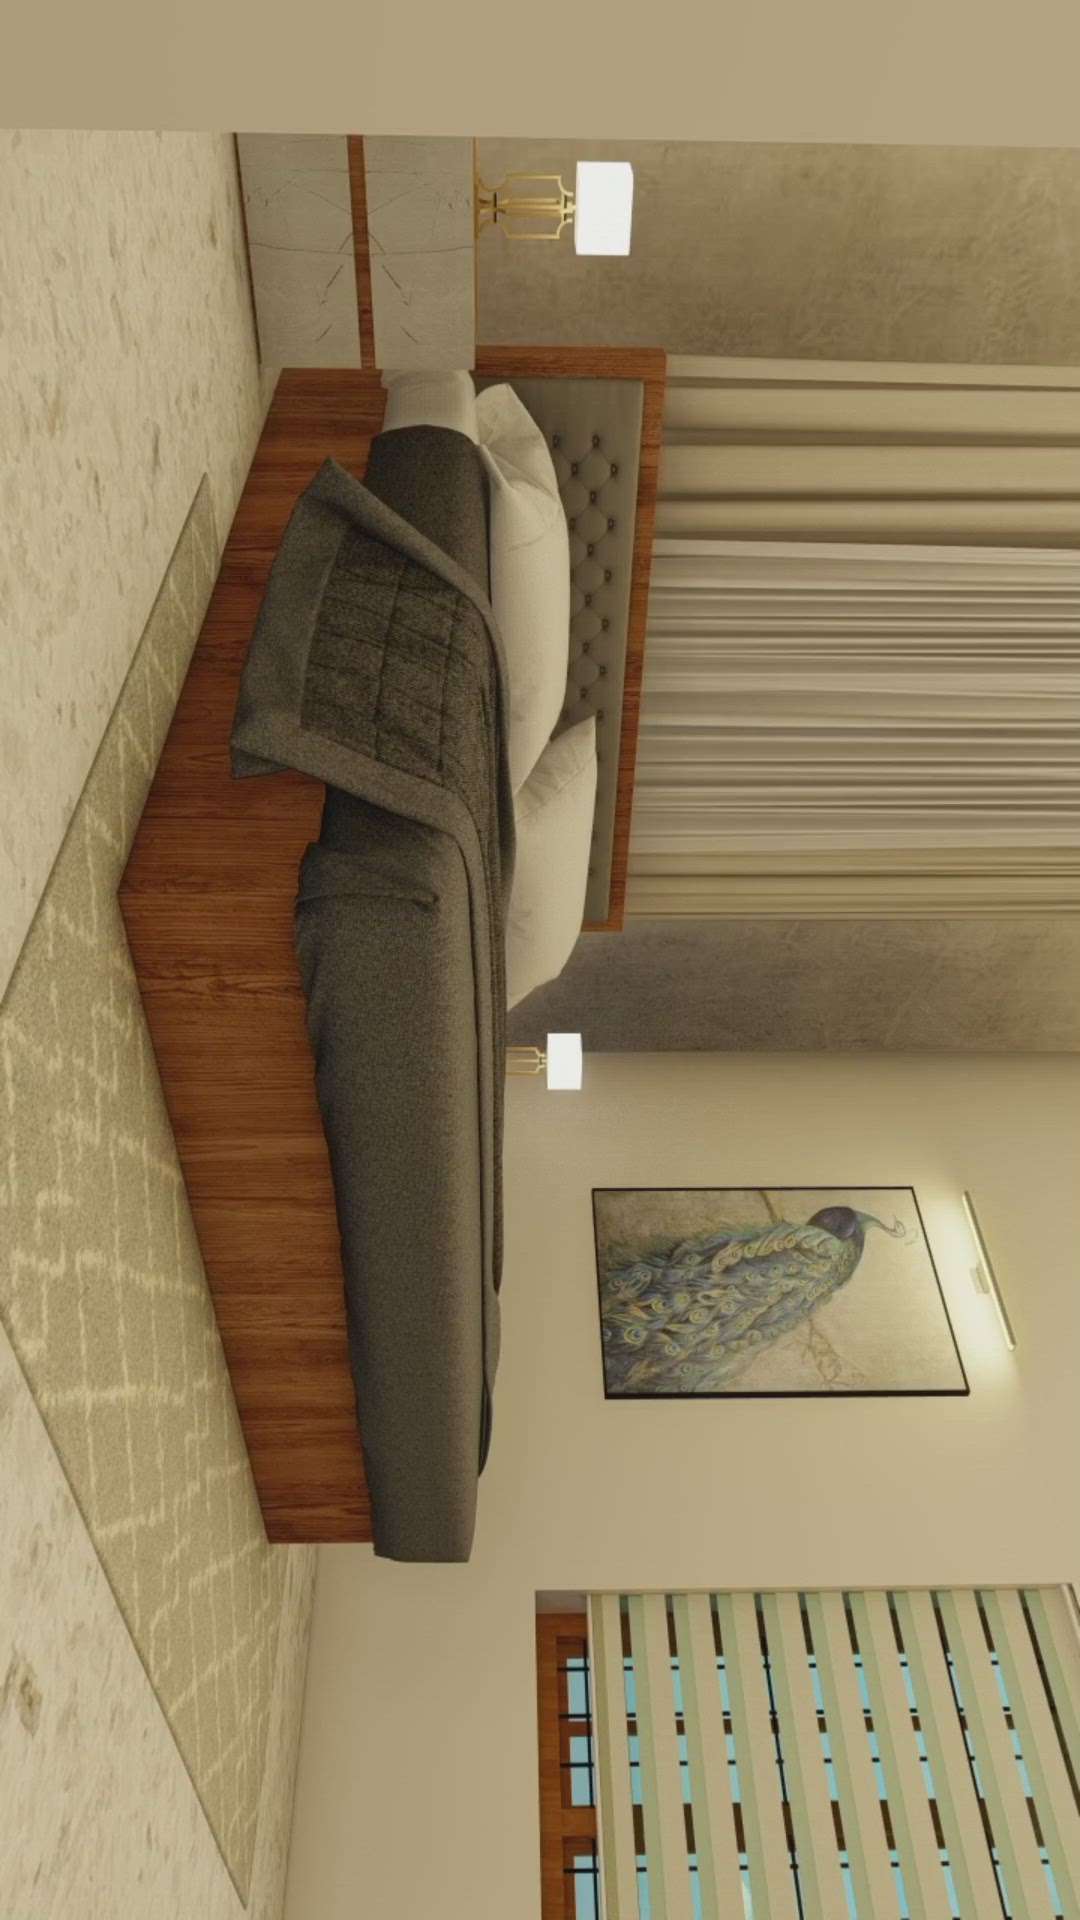 Proposes design for Master Bedroom. 
#lumion11pro #BedroomDecor #walkthrough_animations_video_rendering #walkthrough #BedroomDecor #MasterBedroom #BedroomDesigns #bedcots #WardrobeIdeas #DressingTable